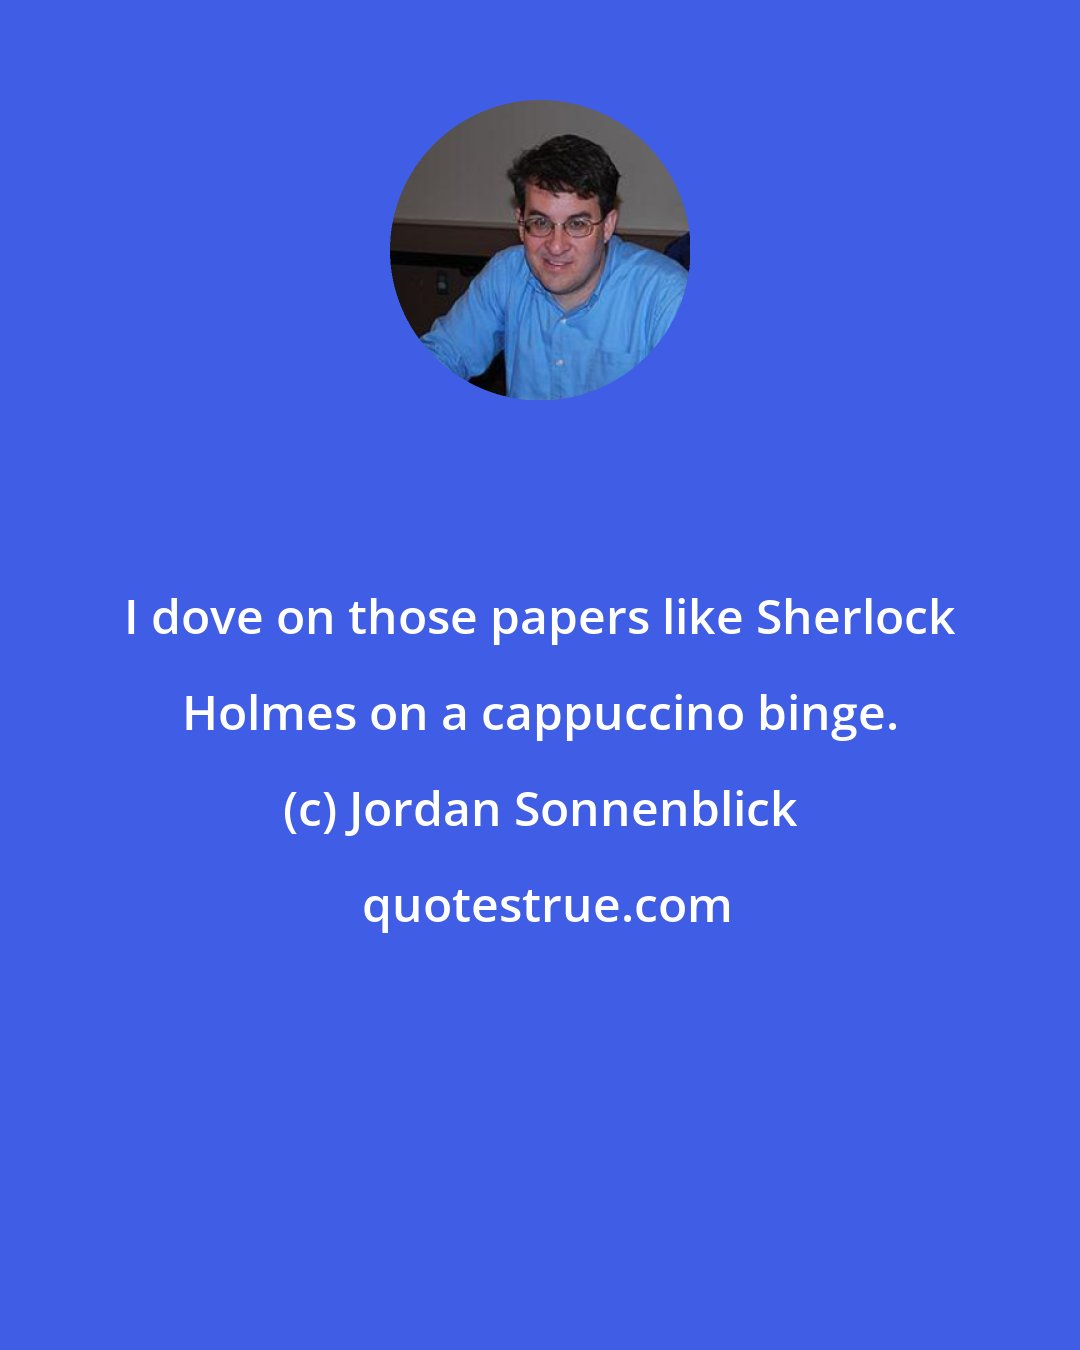 Jordan Sonnenblick: I dove on those papers like Sherlock Holmes on a cappuccino binge.